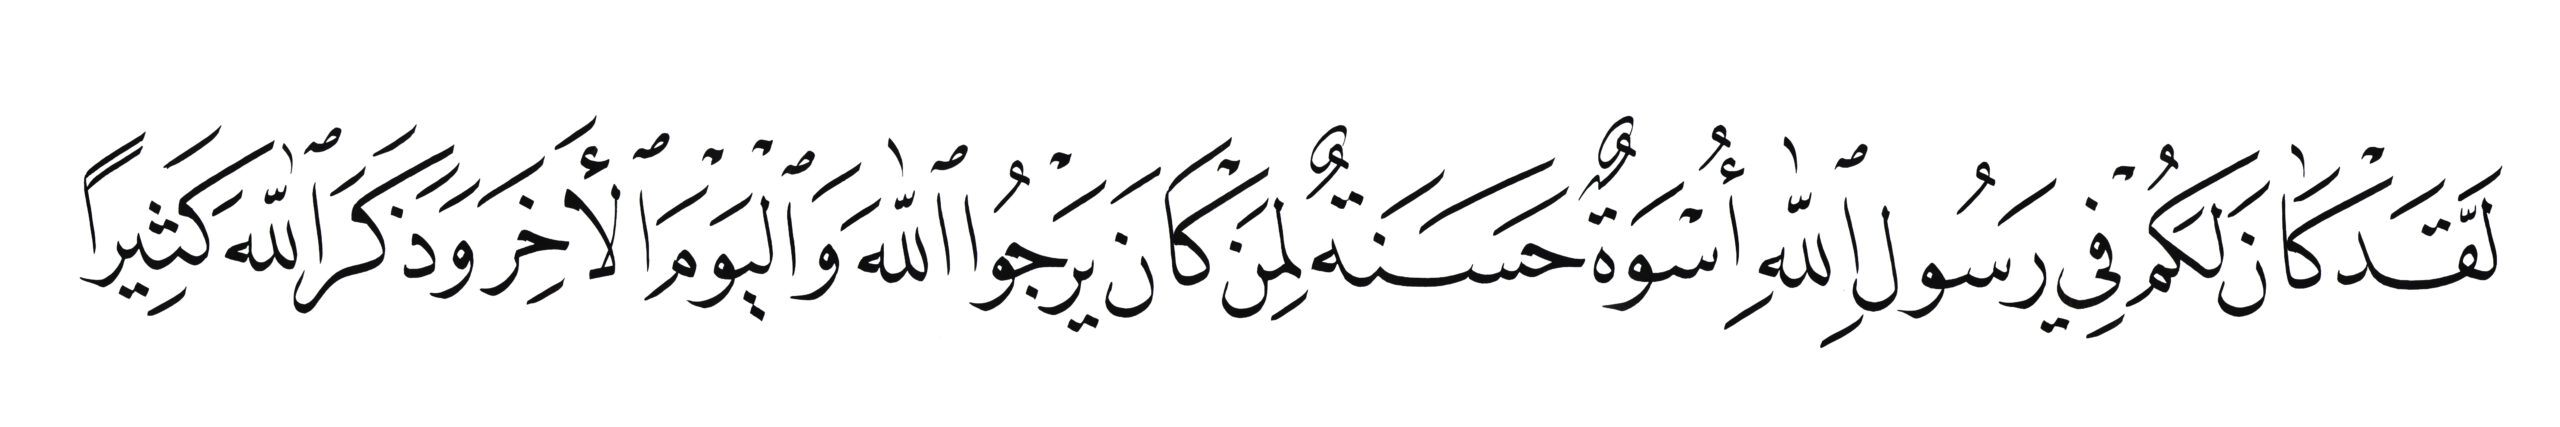 Free Islamic Calligraphy | Al-Ahzab 33, 21